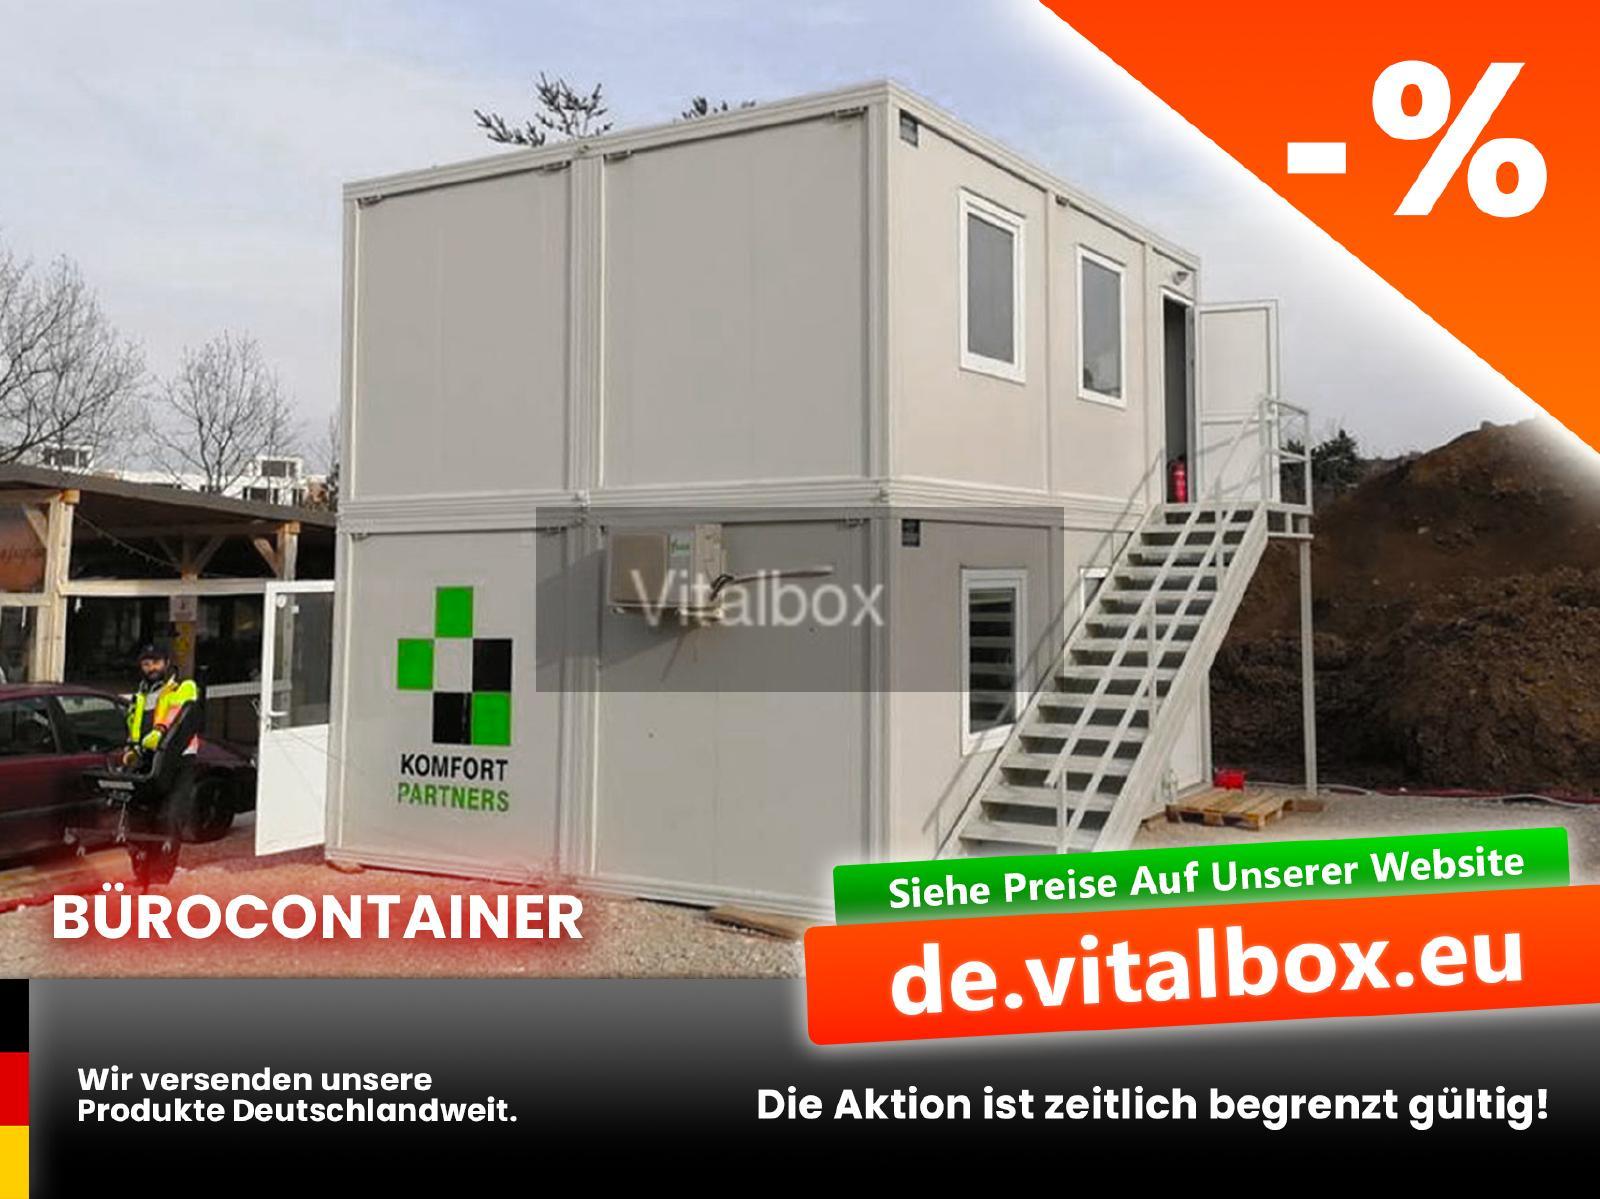 vitalbox